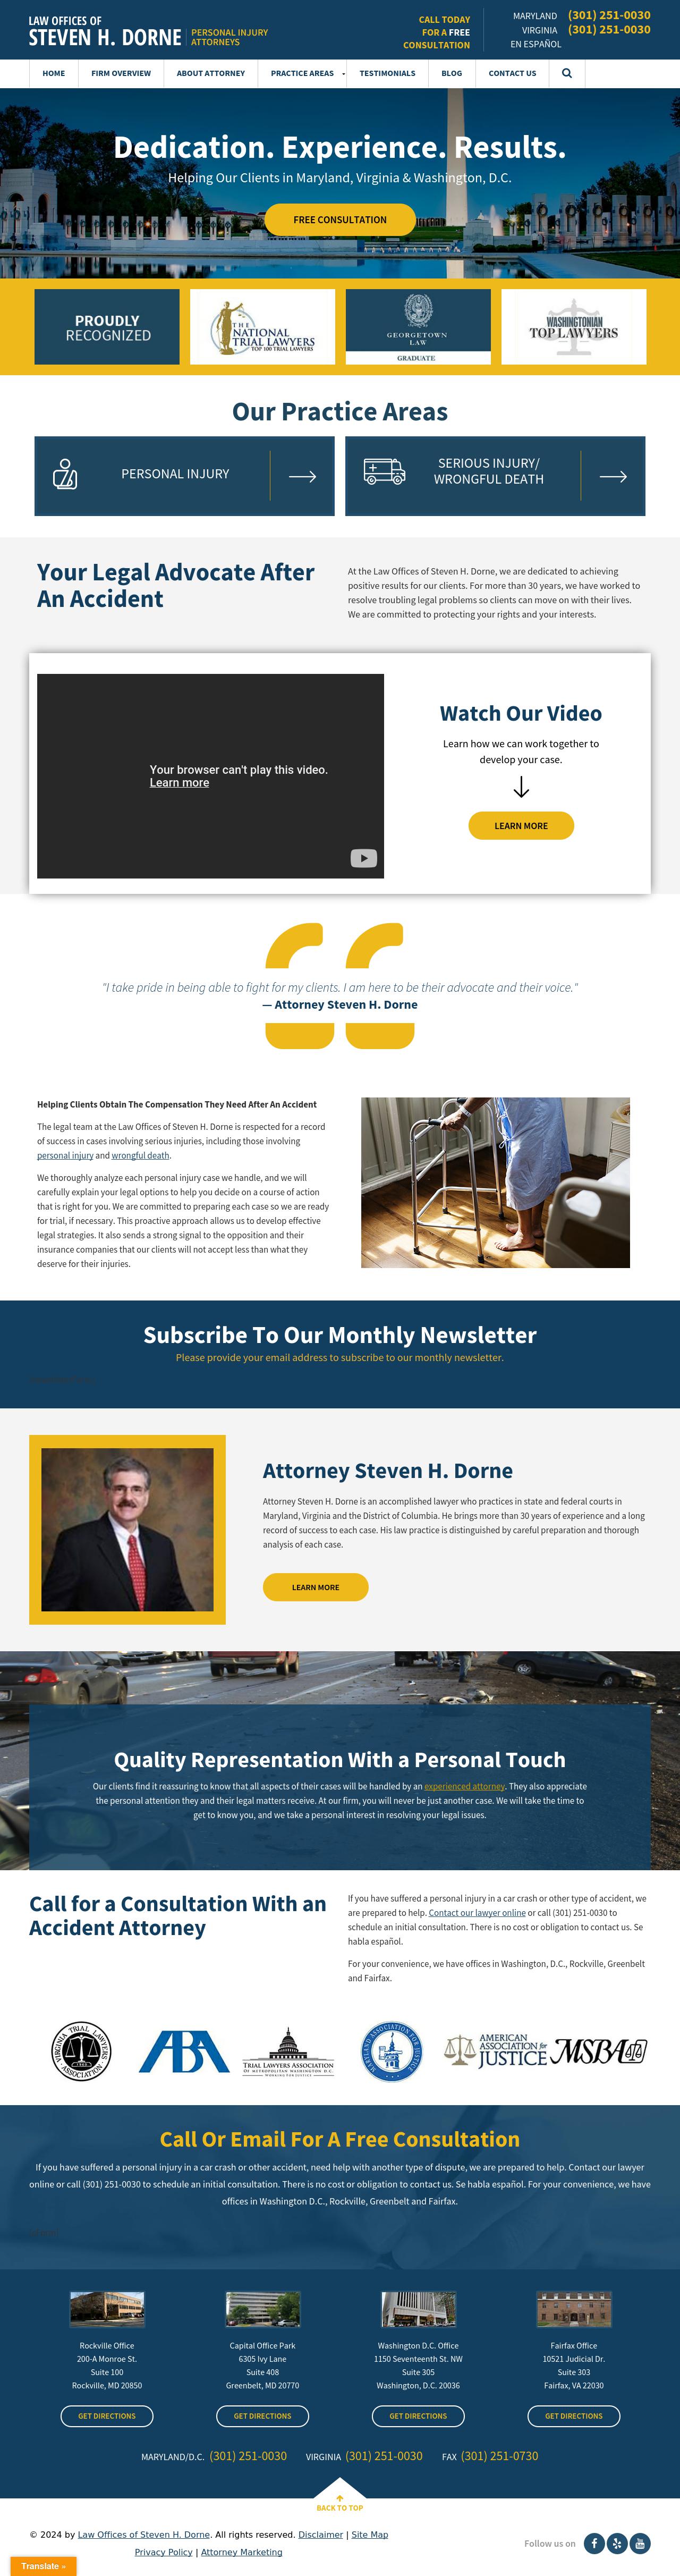 Law Offices of Steven H. Dorne - Fairfax VA Lawyers